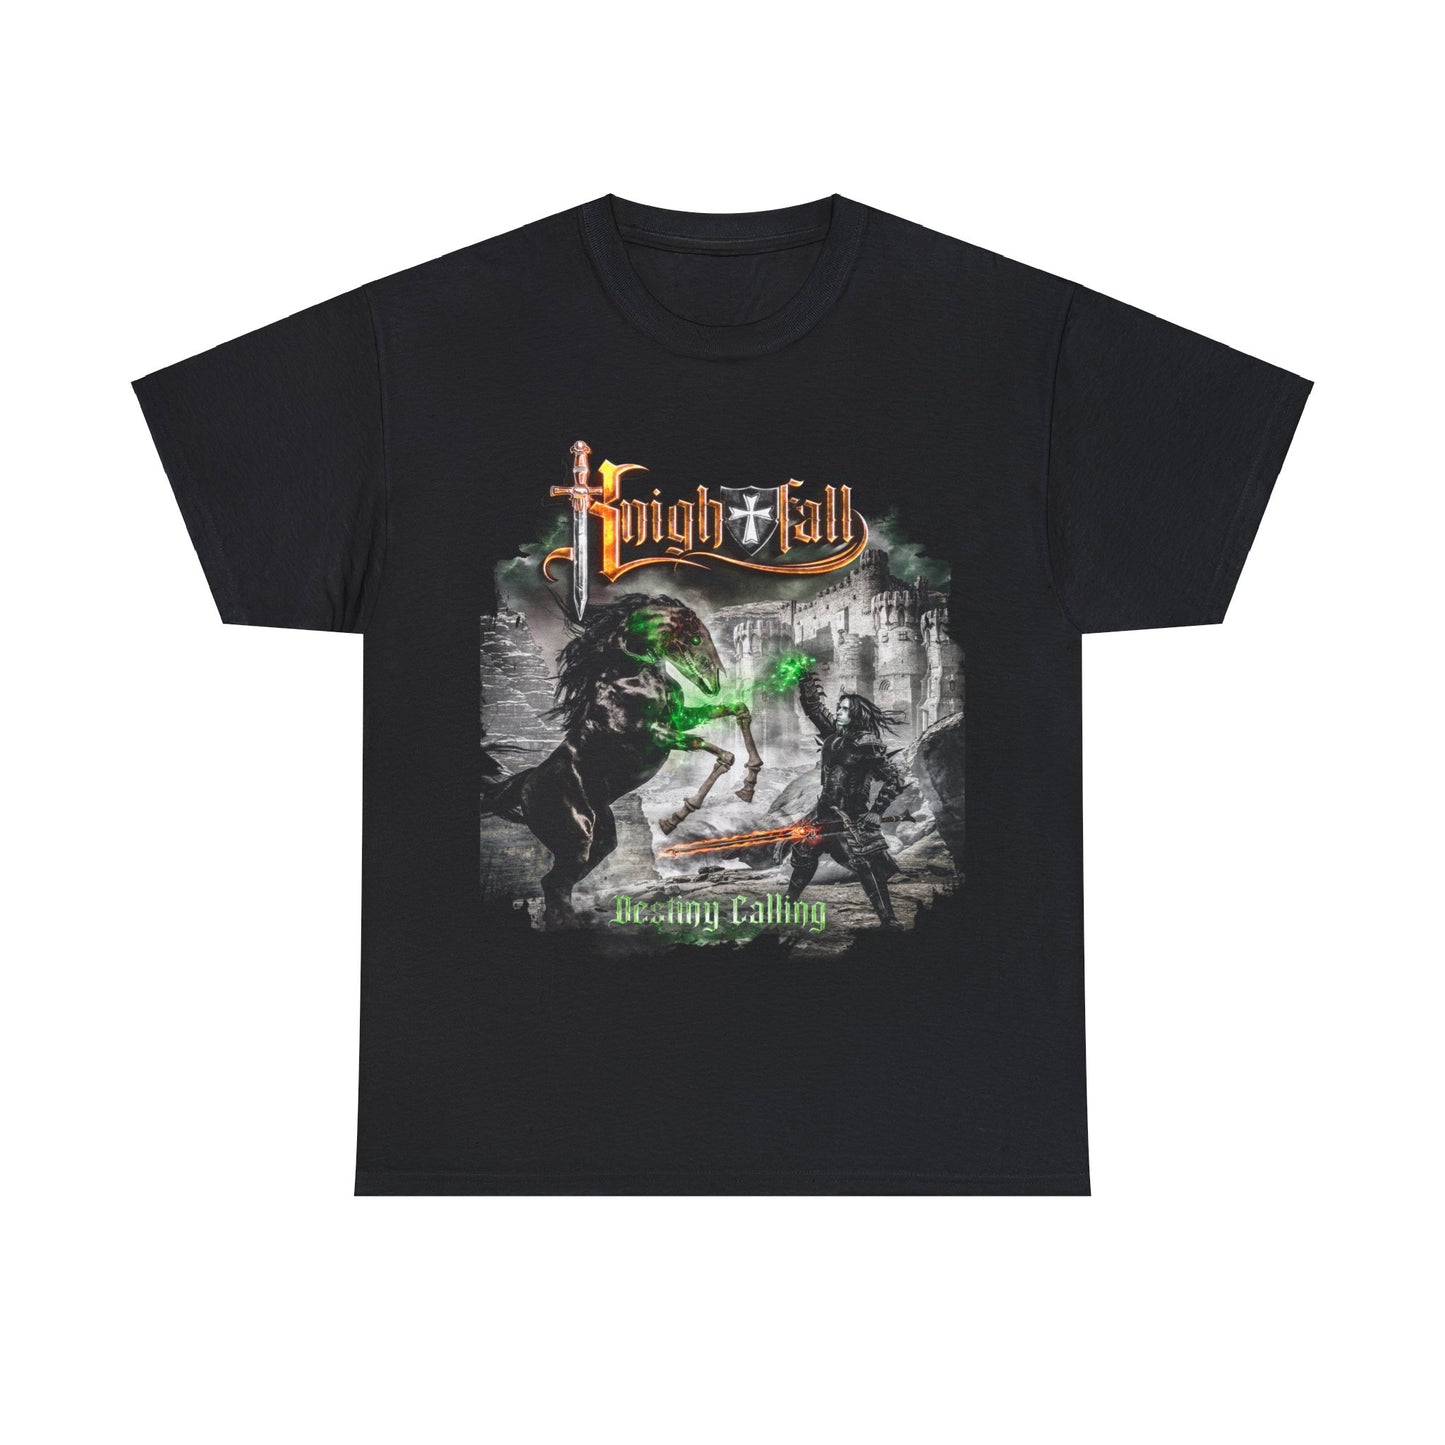 Knightfall - "Destiny Calling" T-Shirt (Limited Edition)